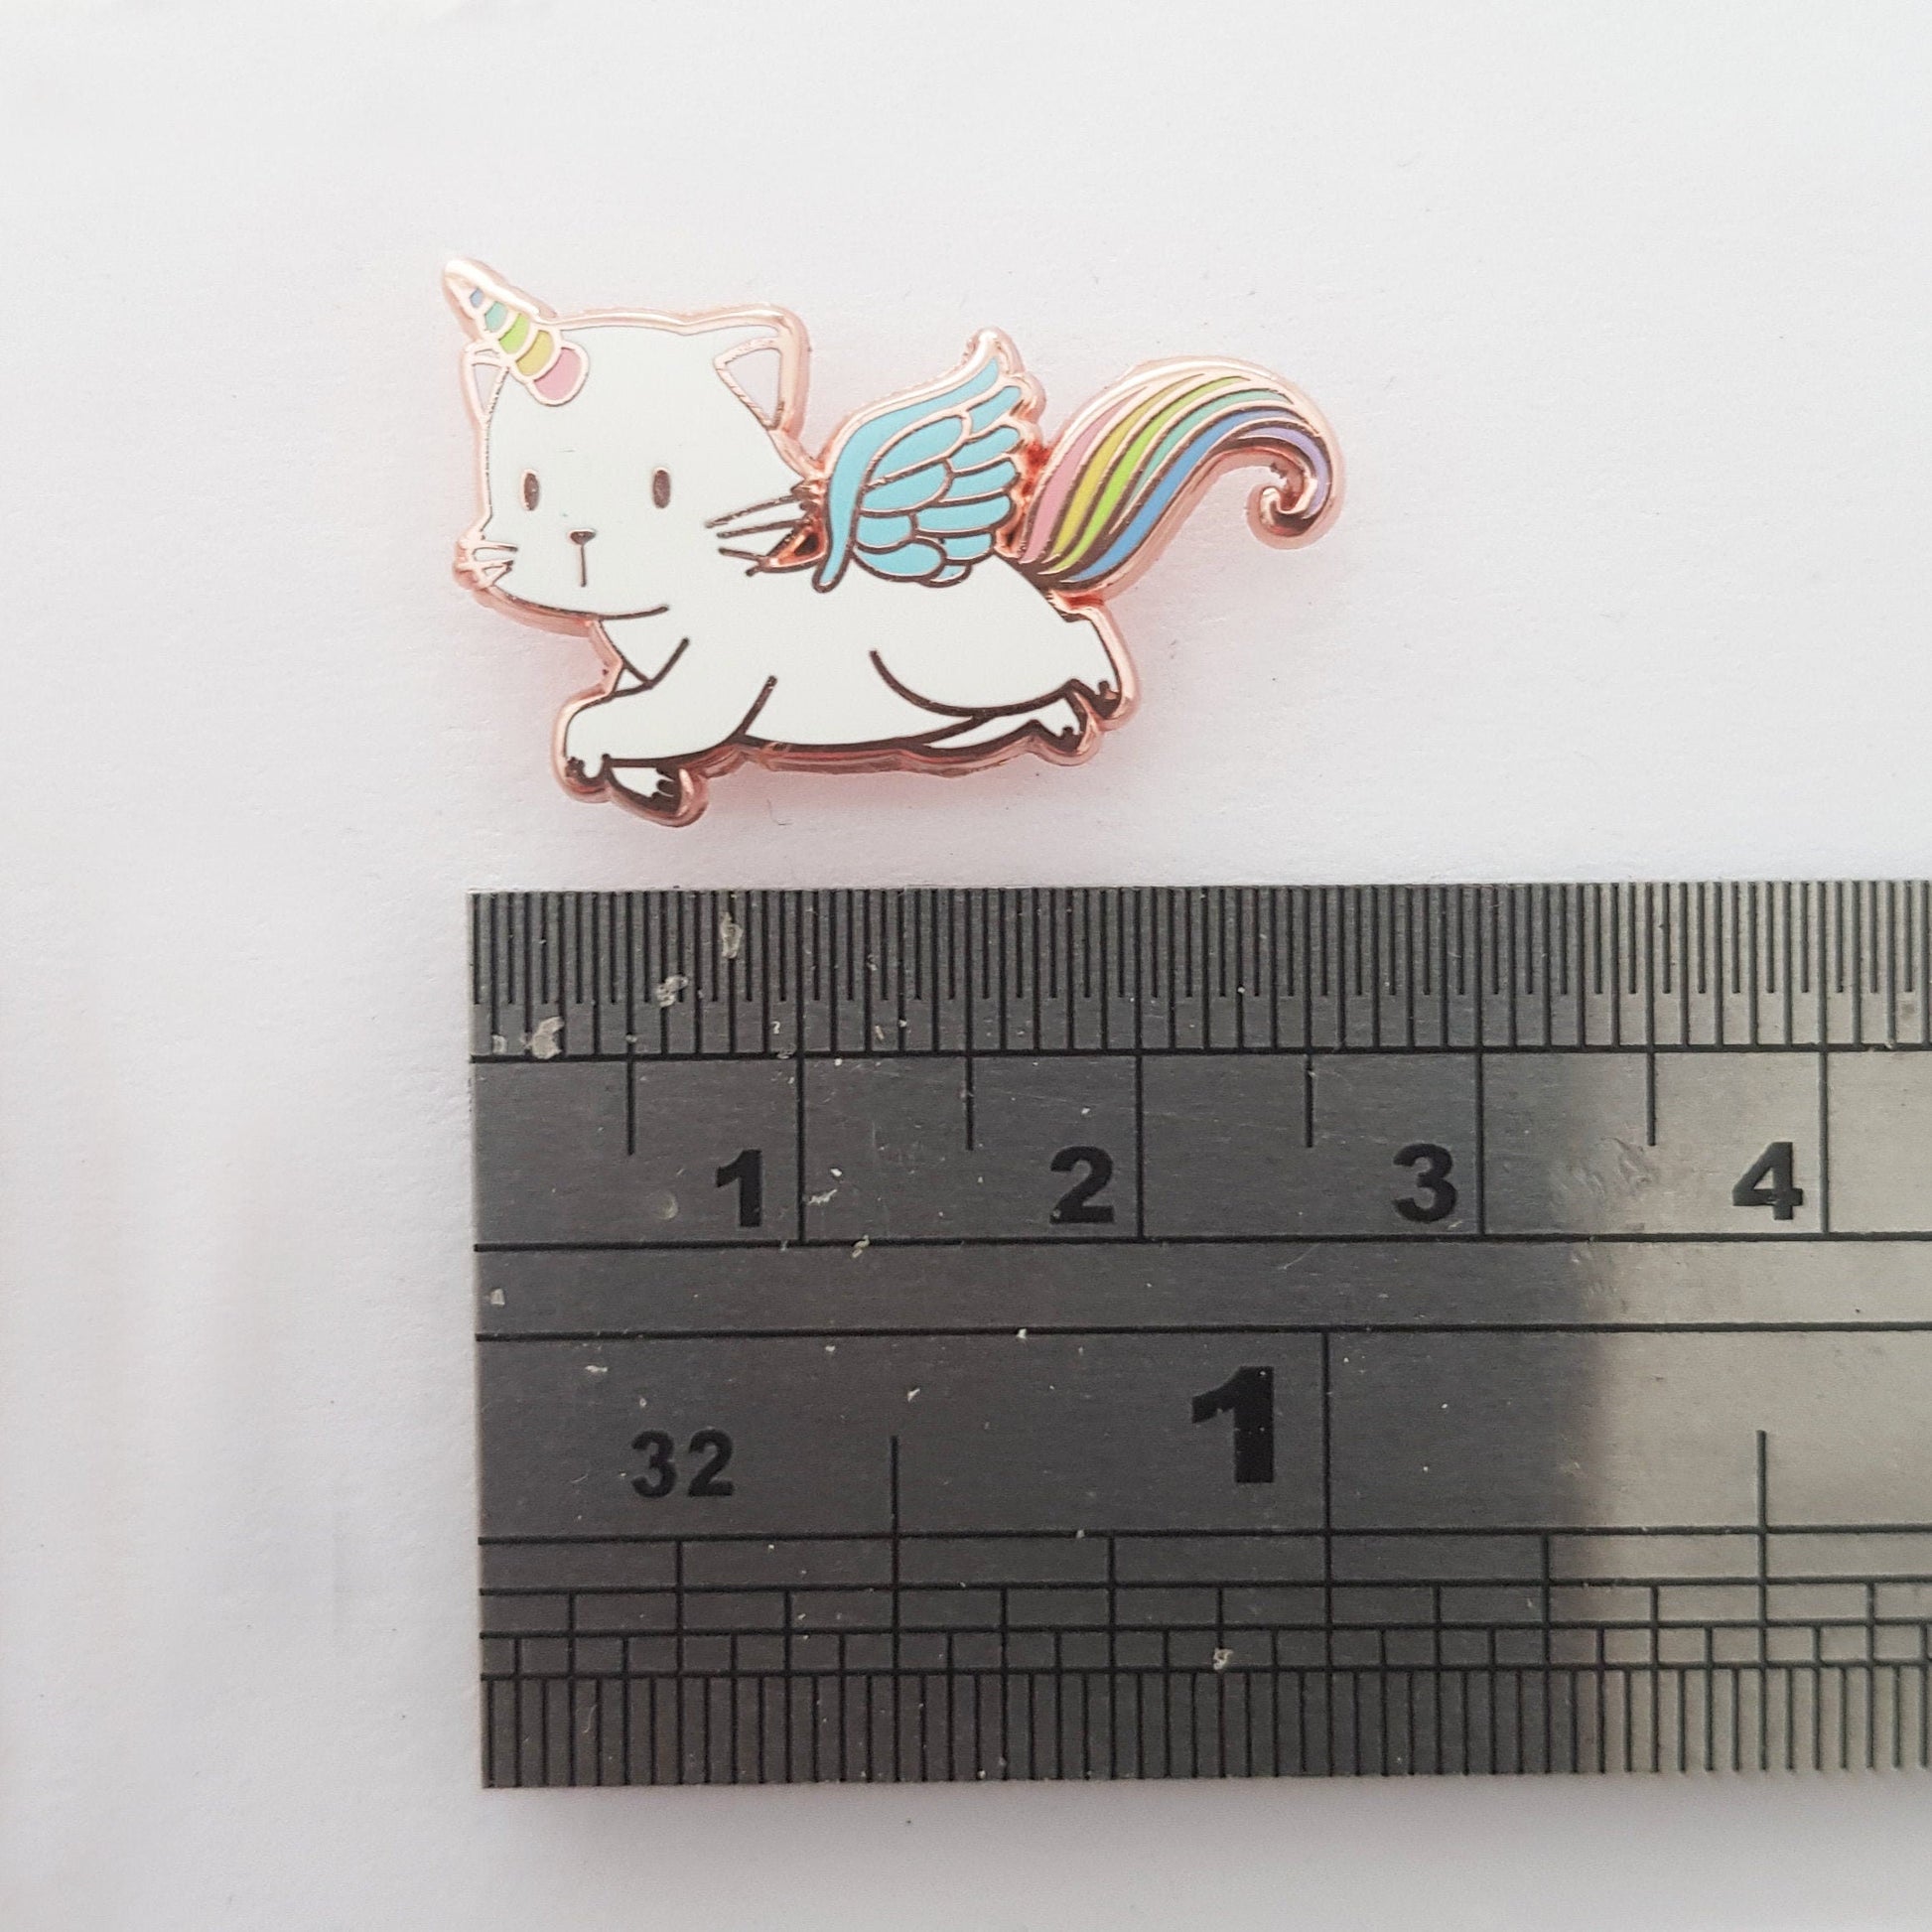 Kitticorn - Small Enamel Pin (Caticorn, Cat Unicorn), Pins, Brooches & Lapel Pins